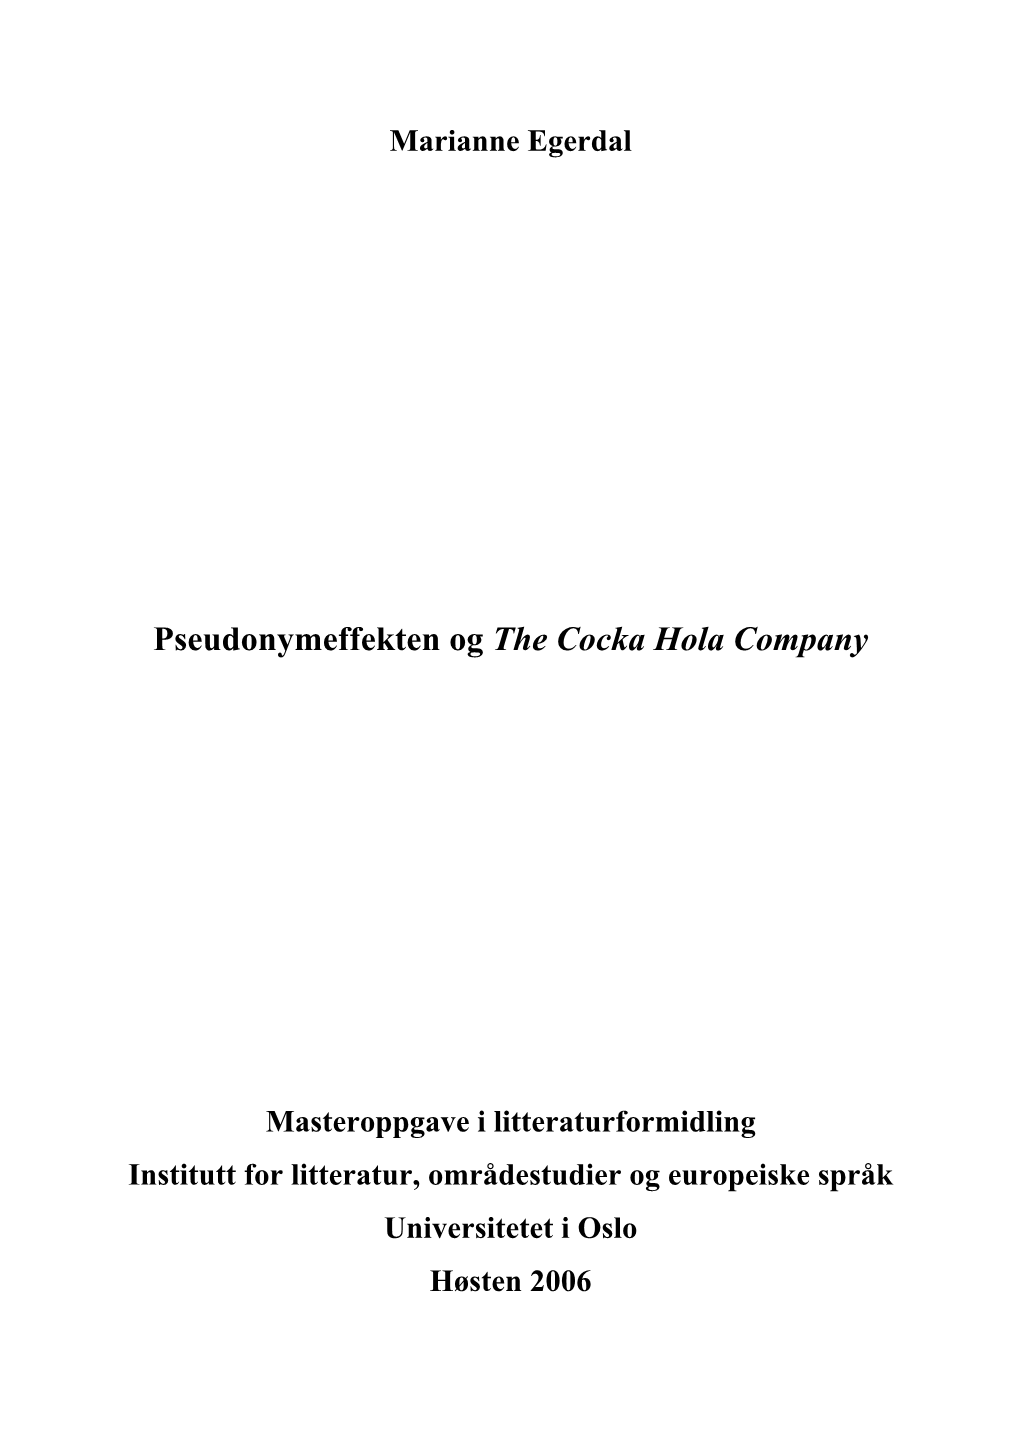 The Cocka Hola Company Og Pseudonymeffekten